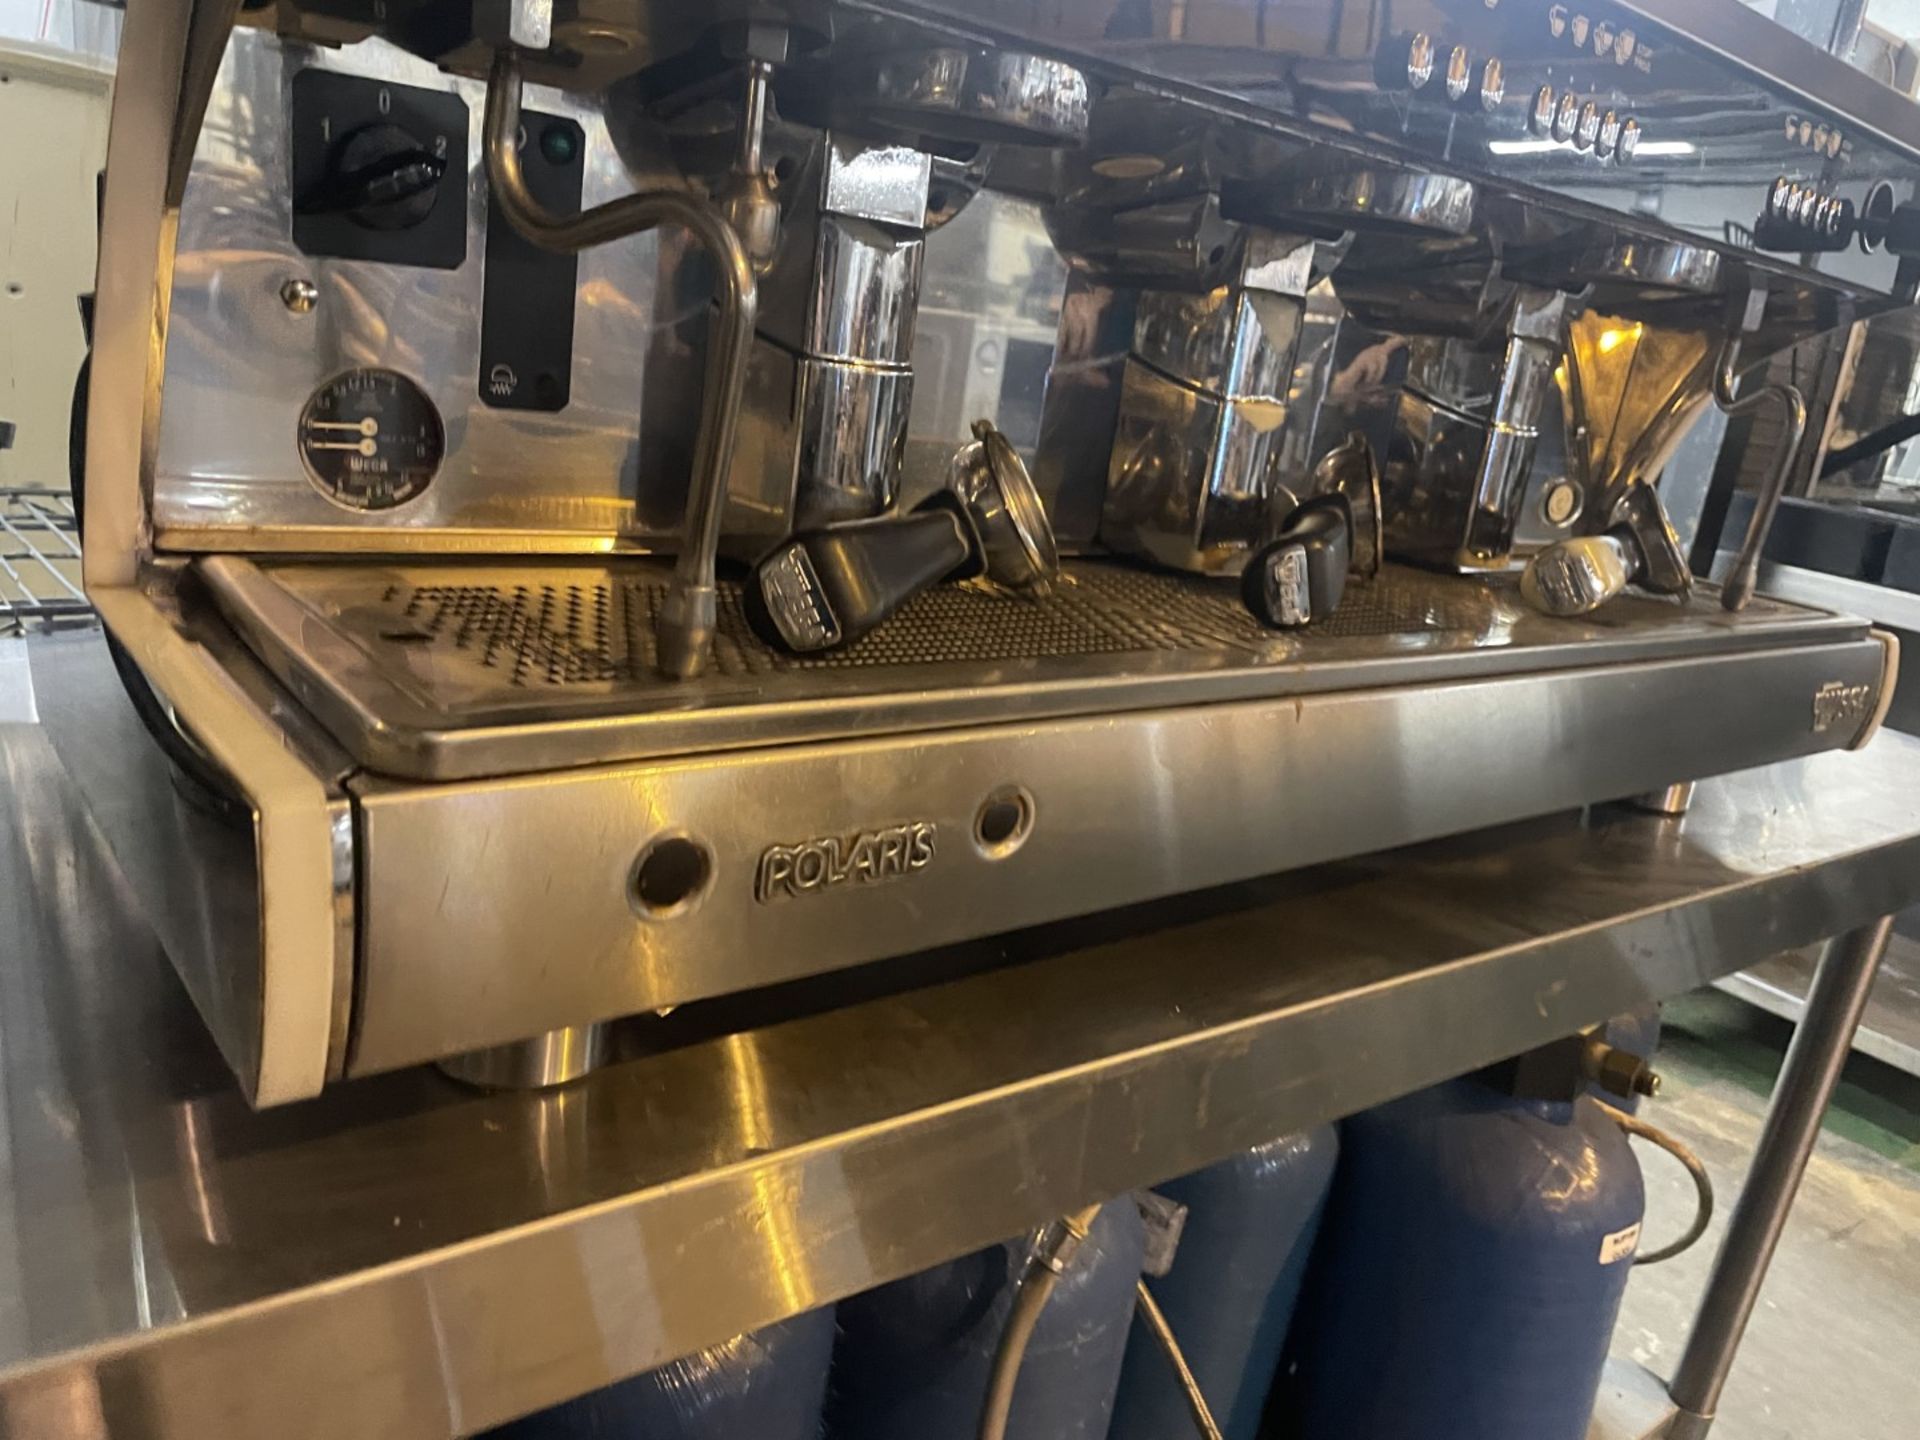 1 x Polaris Wega 3 Group Commercial Espresso Coffee Machine - Stainless Steel / Black Exterior - 3 P - Image 2 of 9